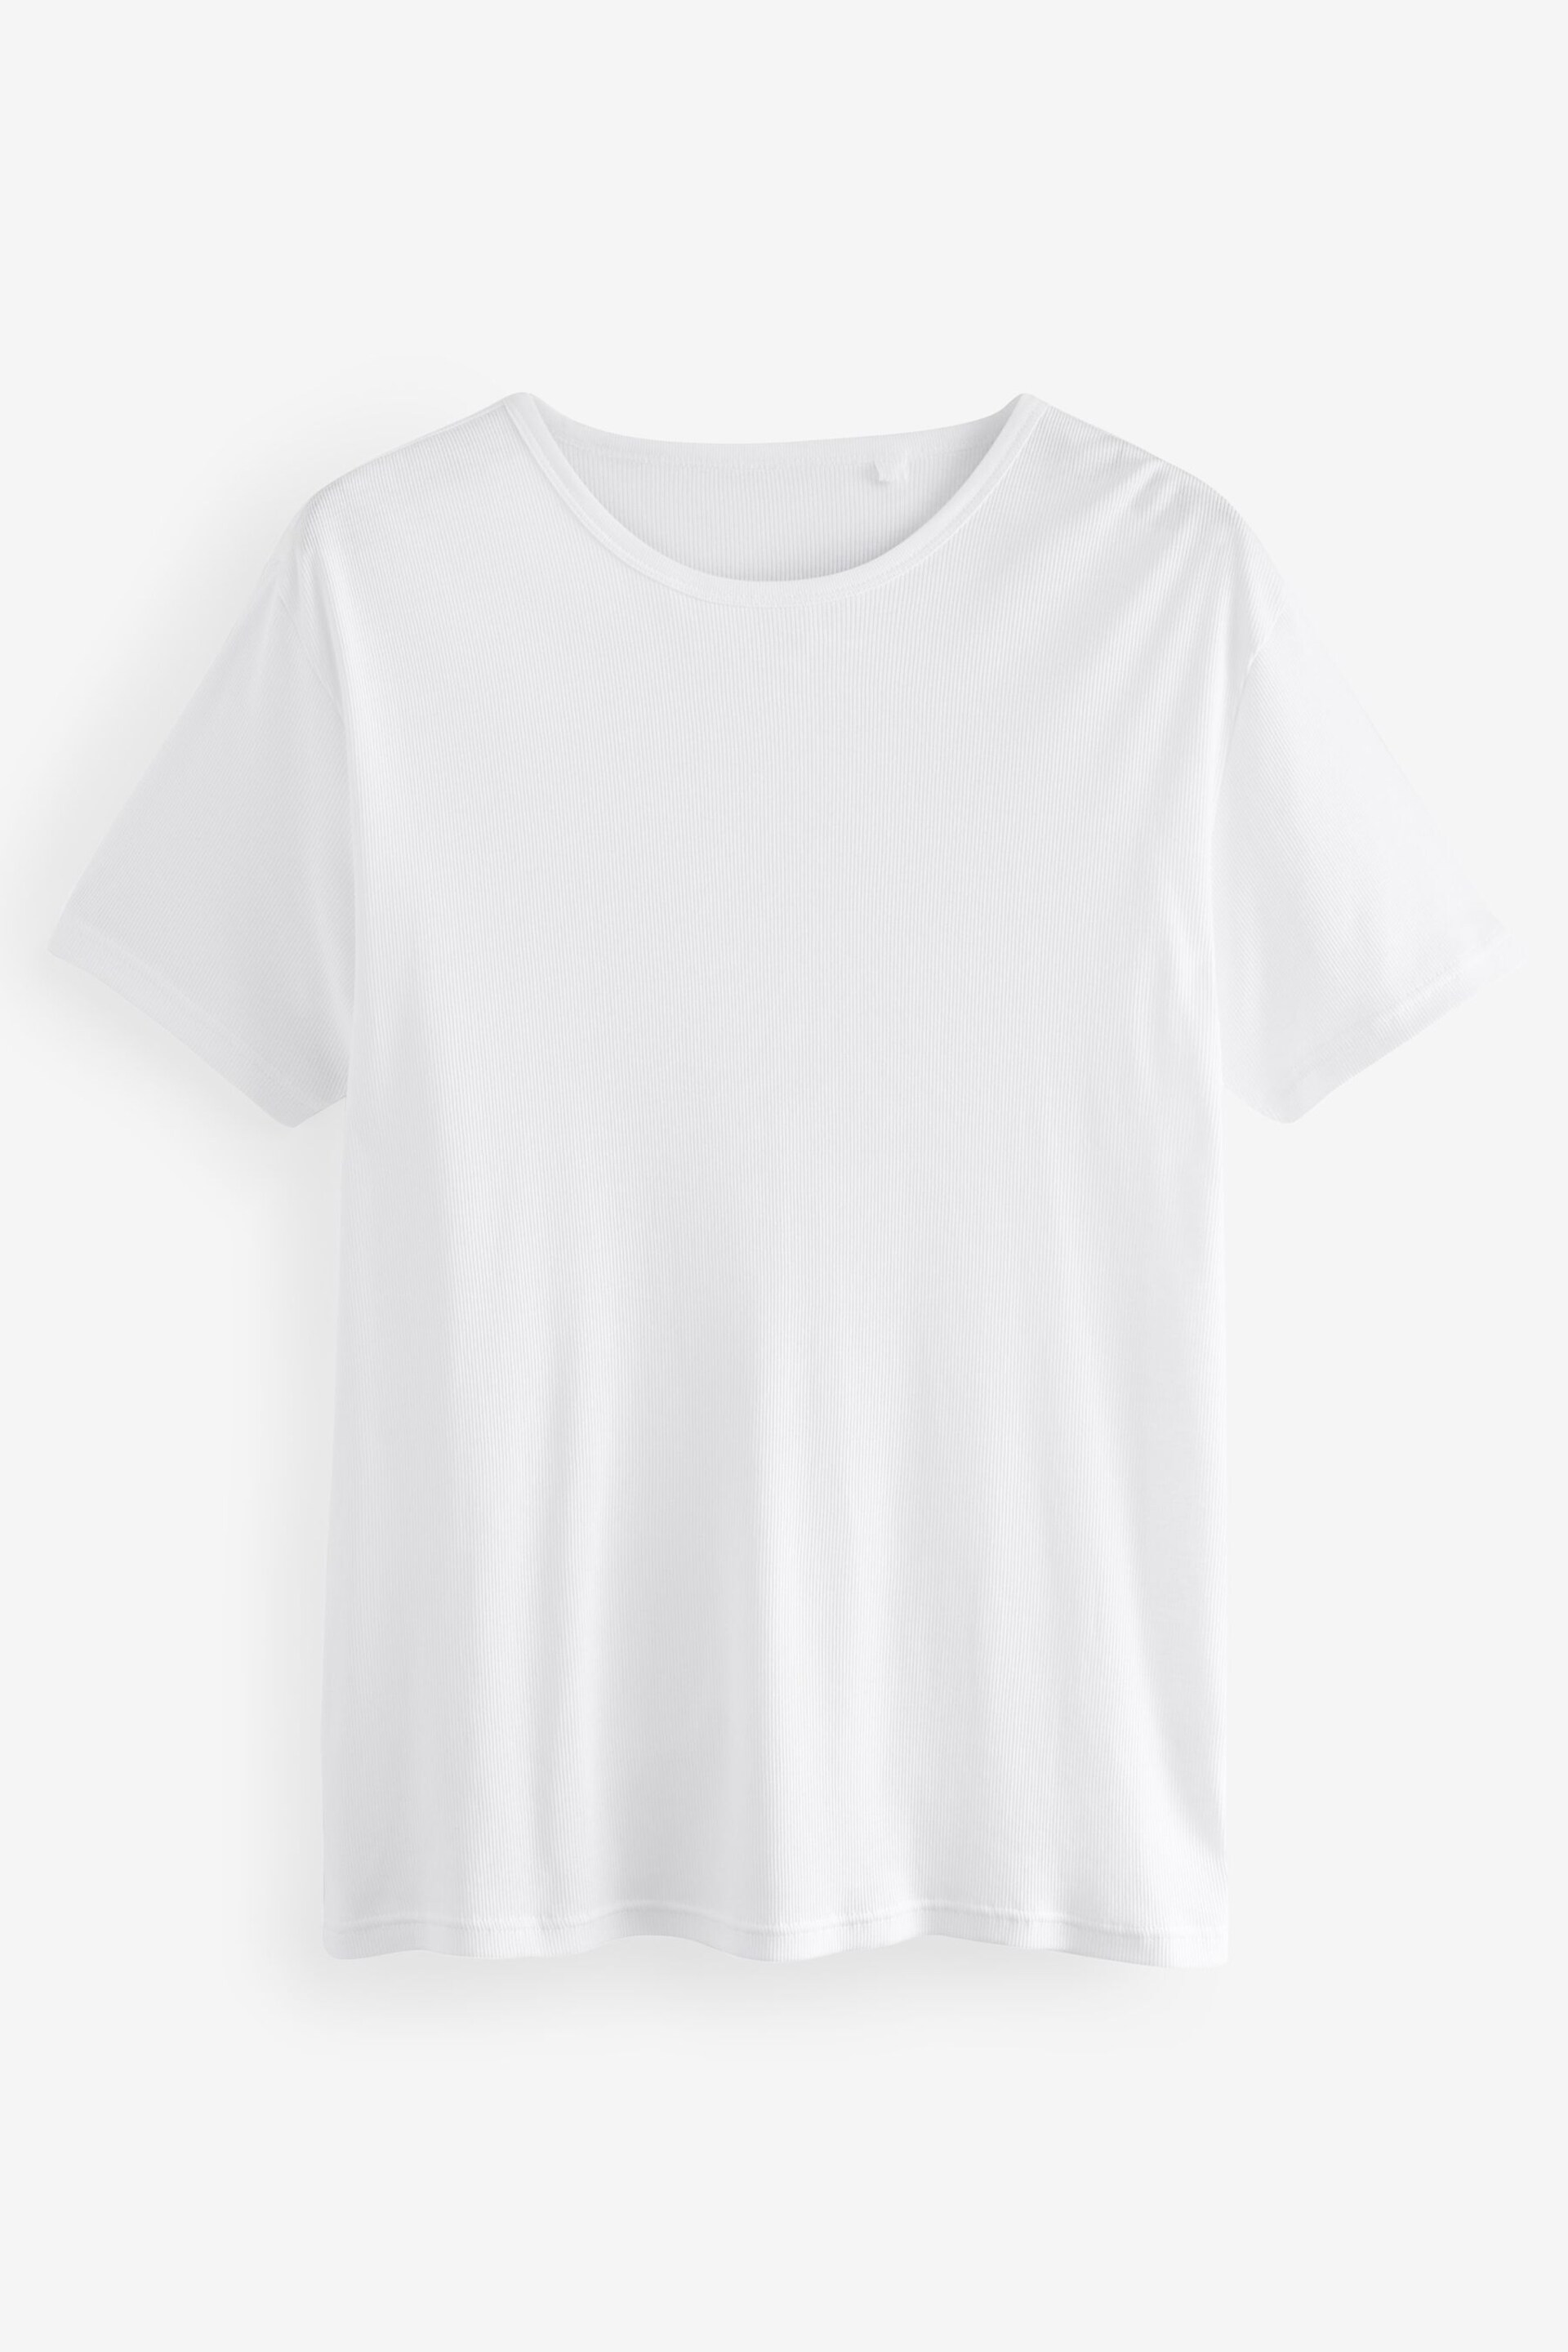 White Rib Slim T-Shirts 5 Pack - Image 2 of 8